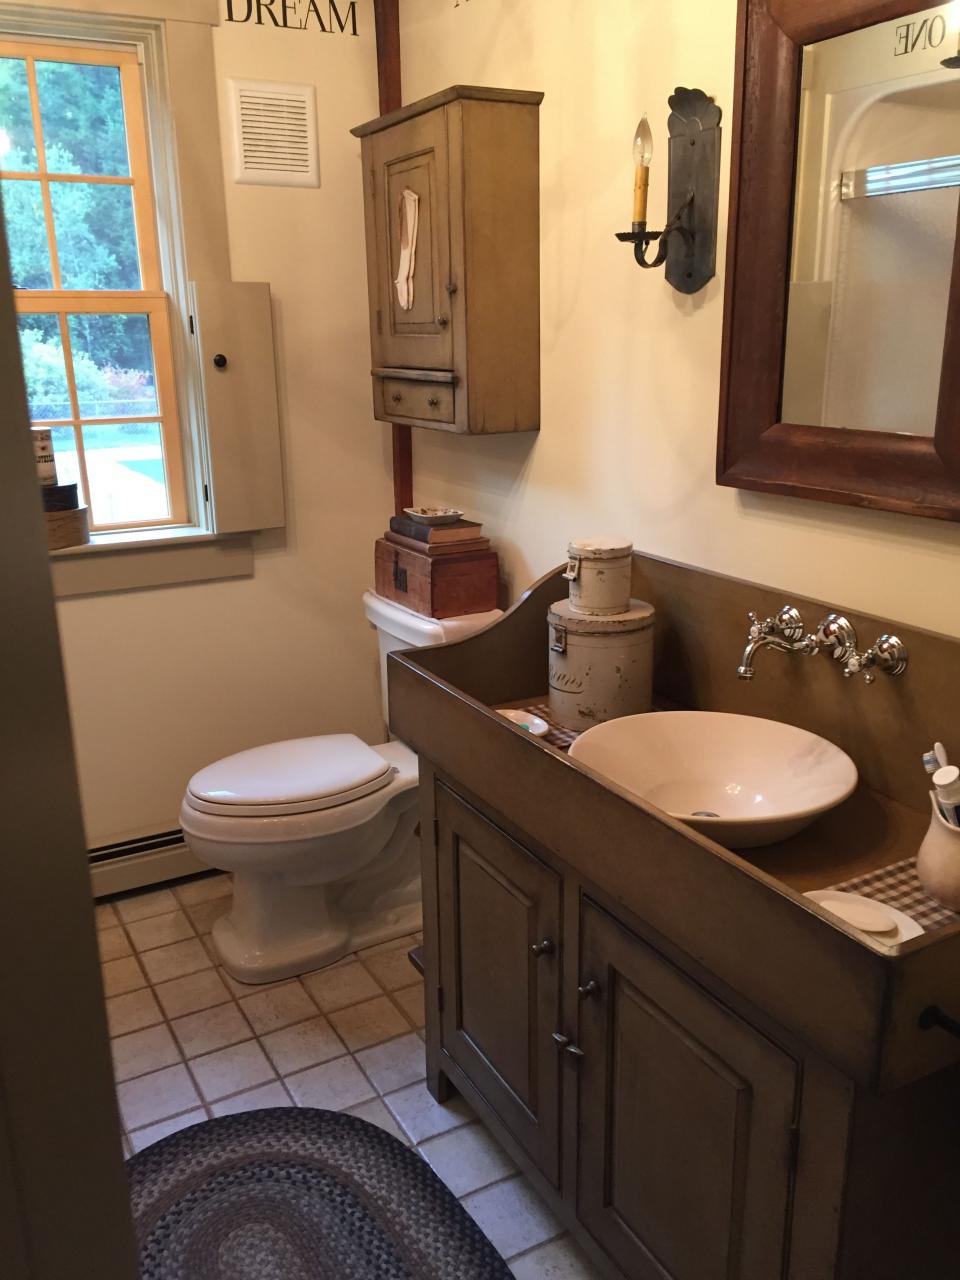 Primitive Bathroom Decor Ideas bathroom and kitchen